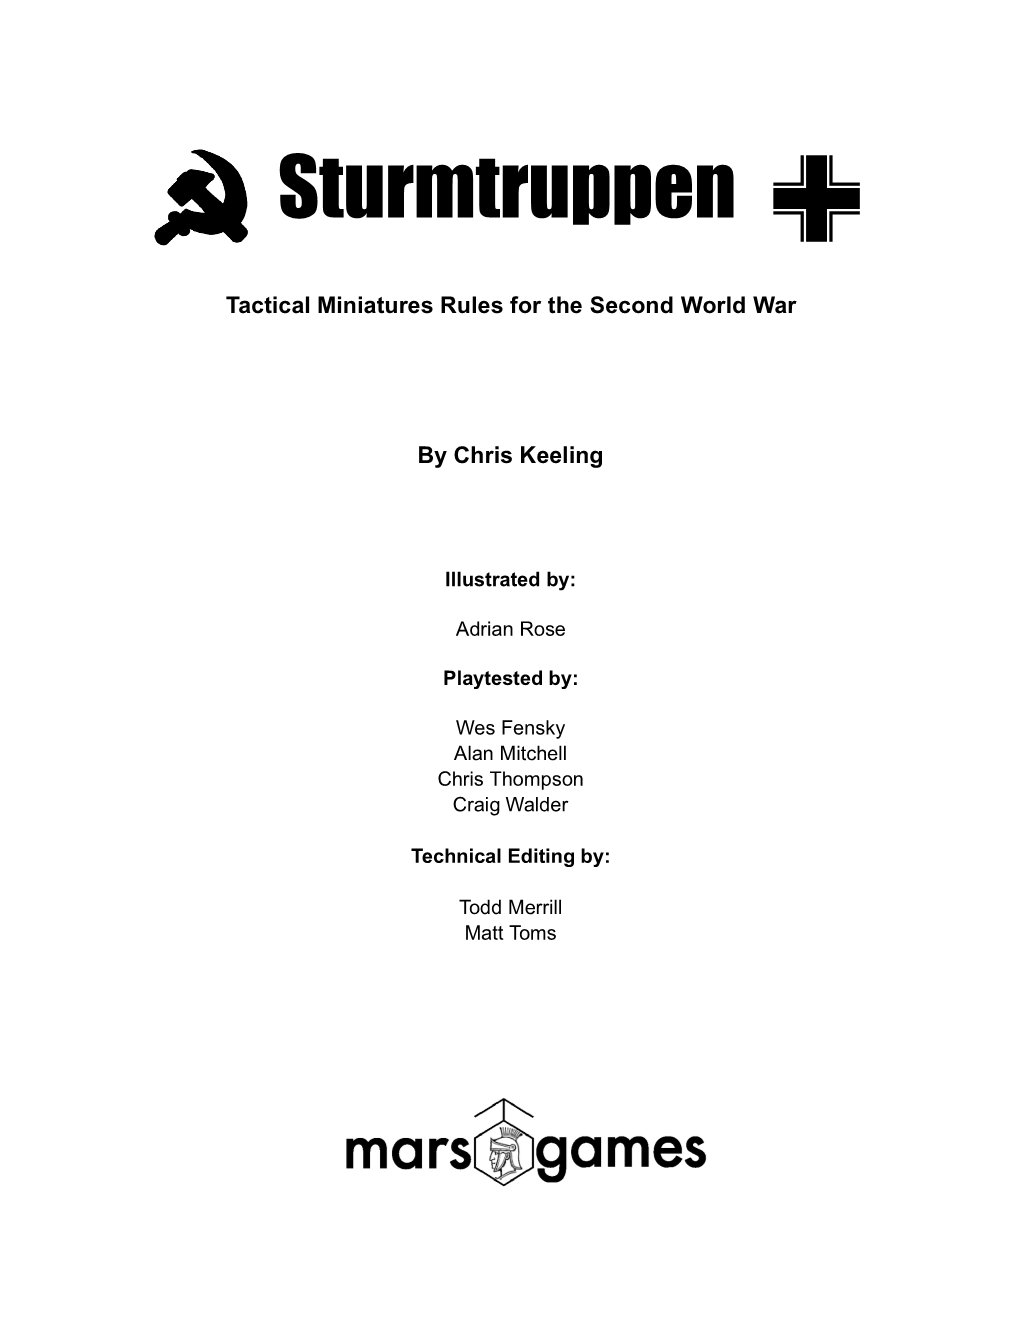 Sturmtruppen and Entire Contents Copyright © 2001 Chris Keeling